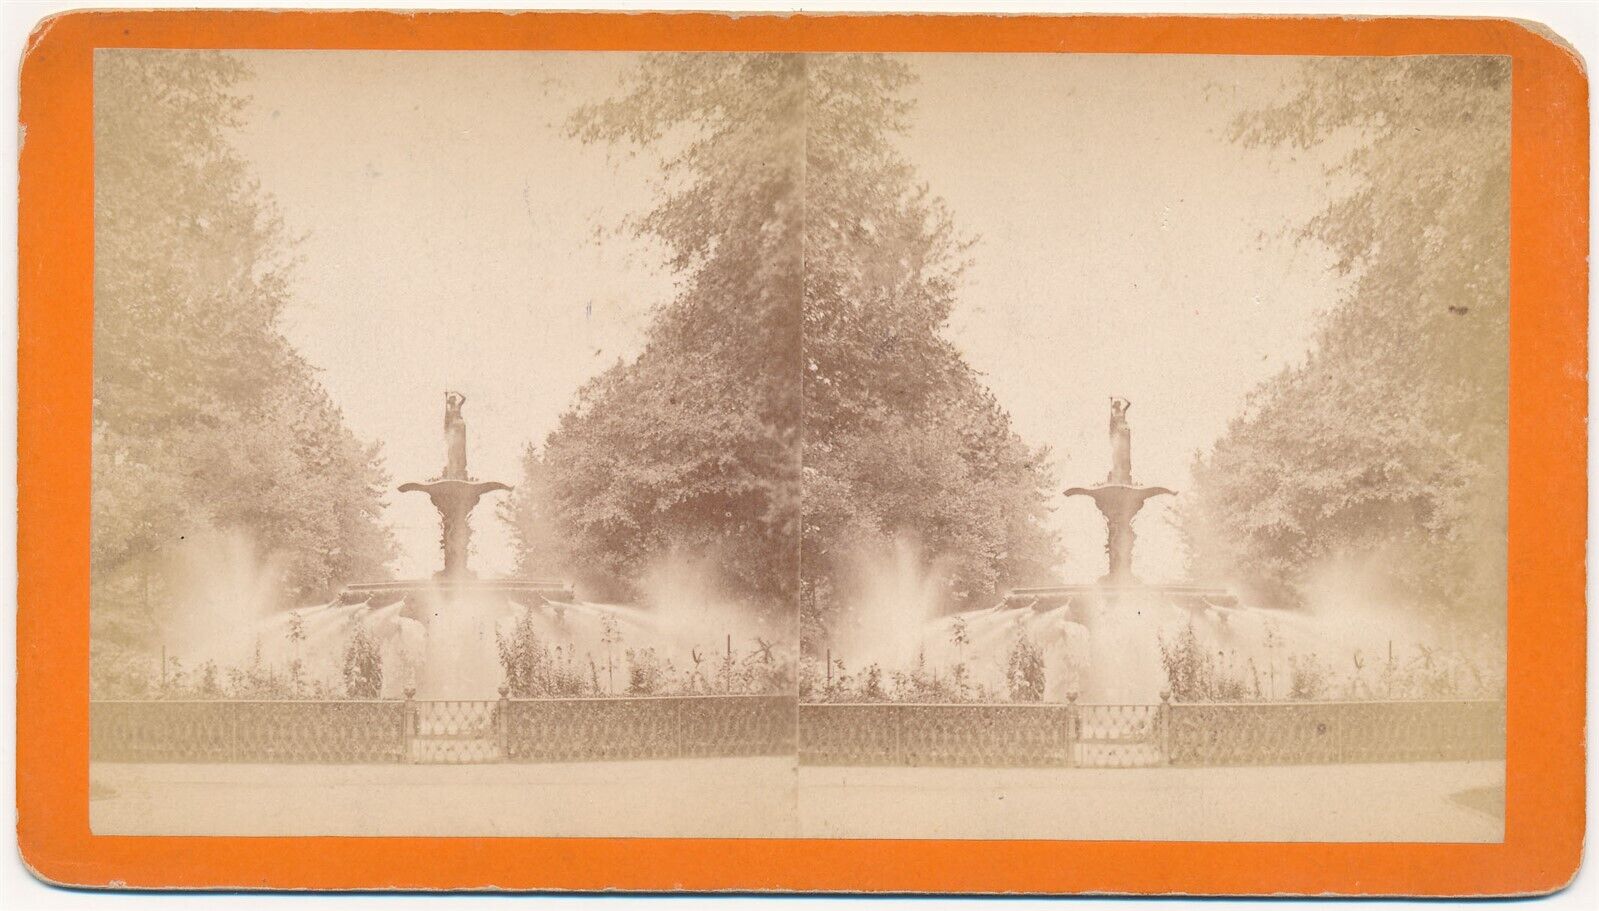 GEORGIA SV - Savannah - Forsyth Park Fountain - JA Palmer 1870s